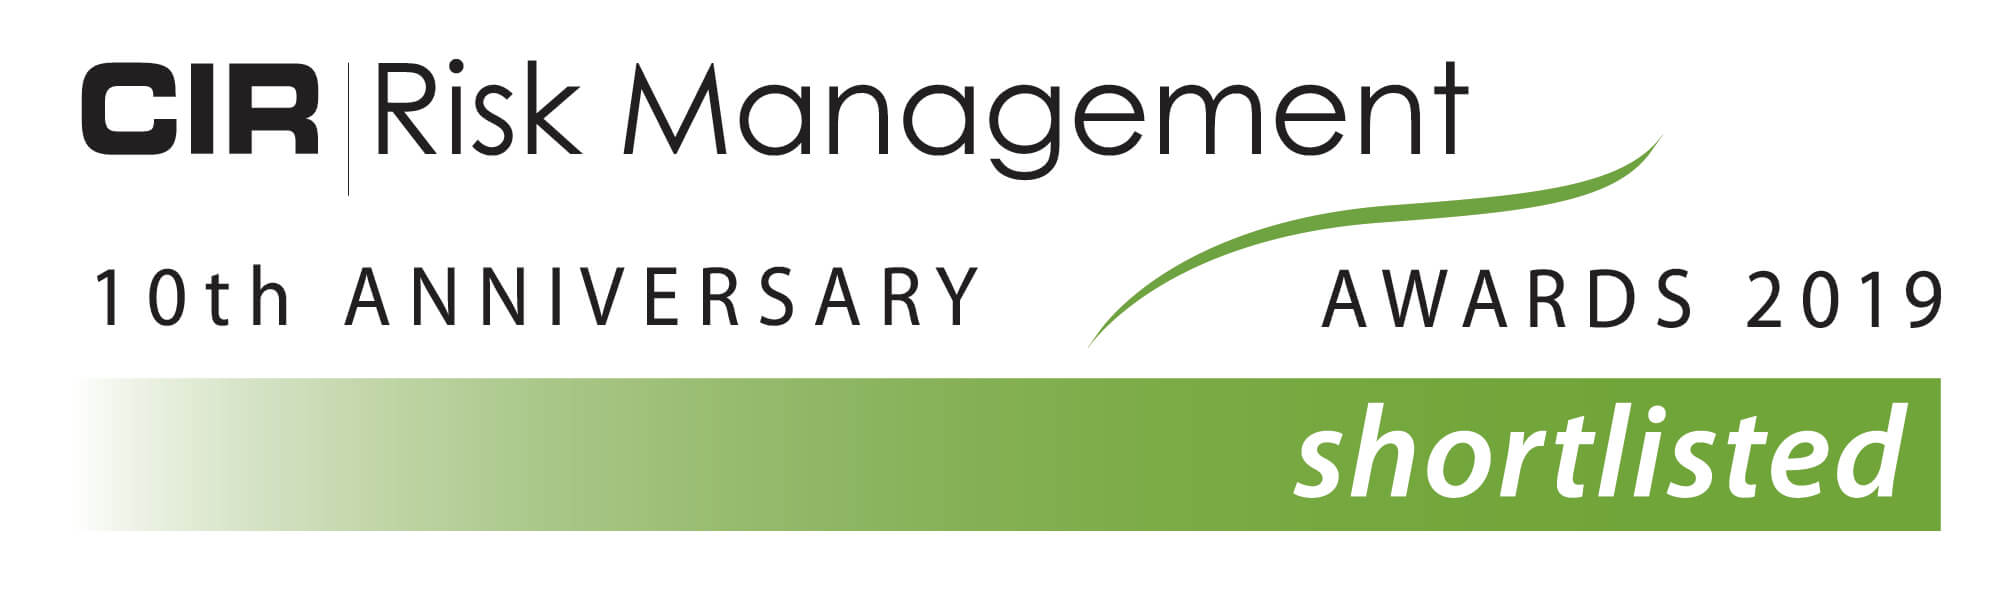 CIR risk management 10th anniversary awards 2019 shortlisted logo